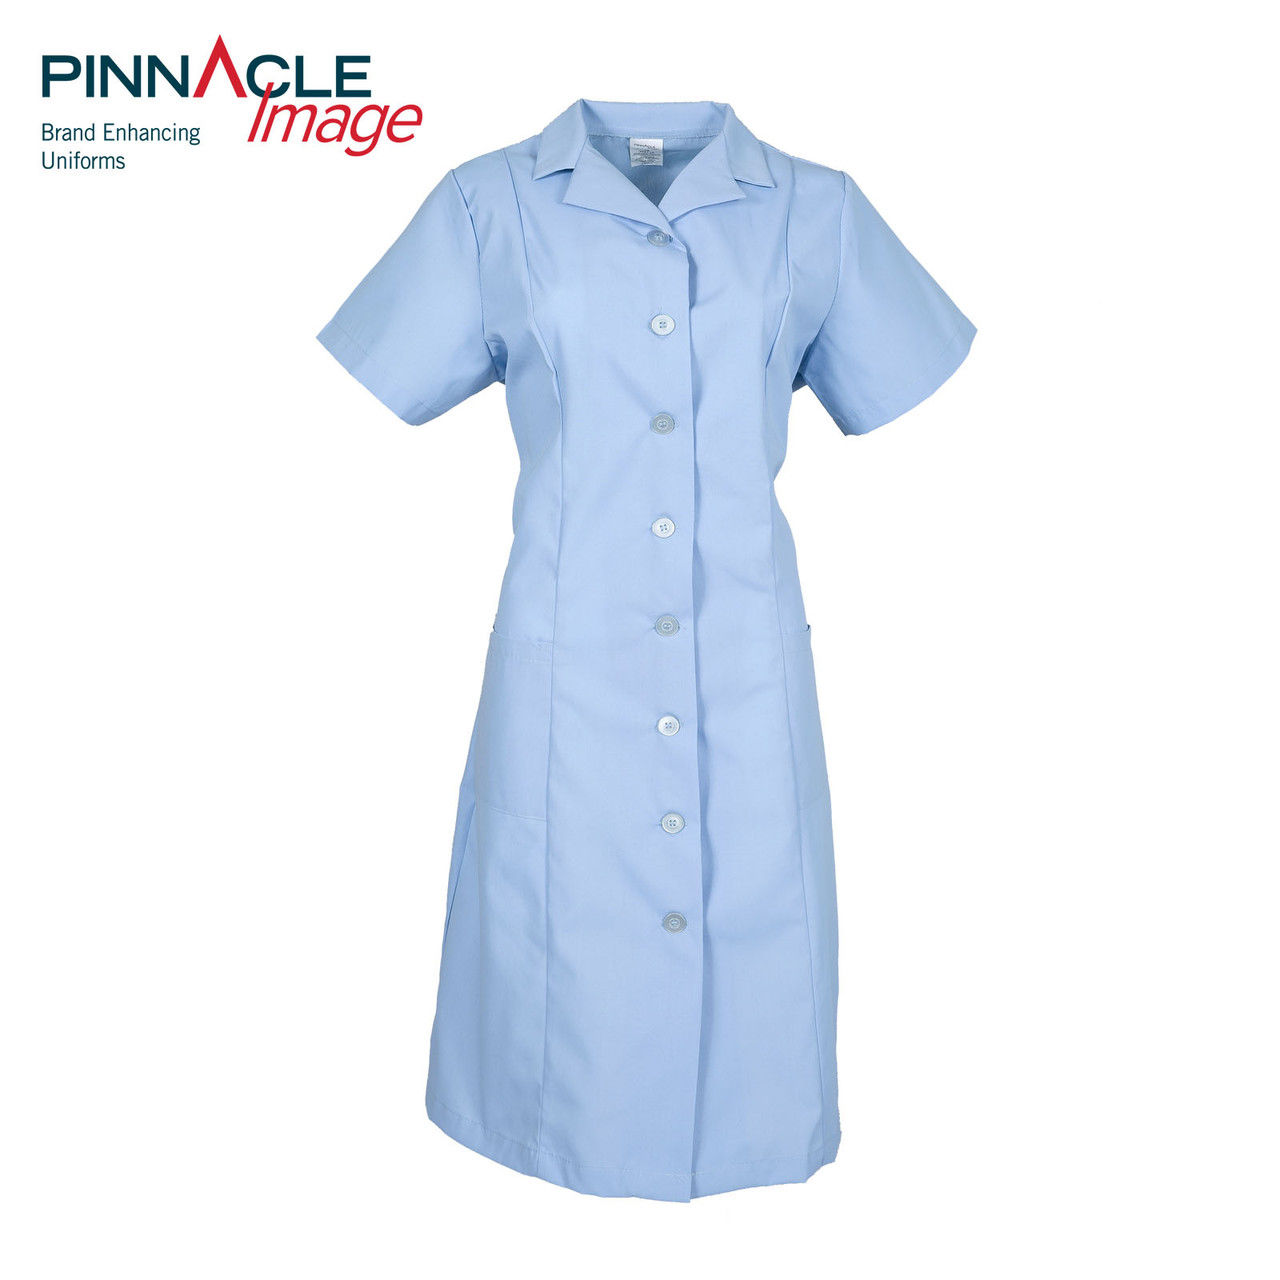 Is the blue uniform dress made of the same material as the Light Blue Princess Dress?